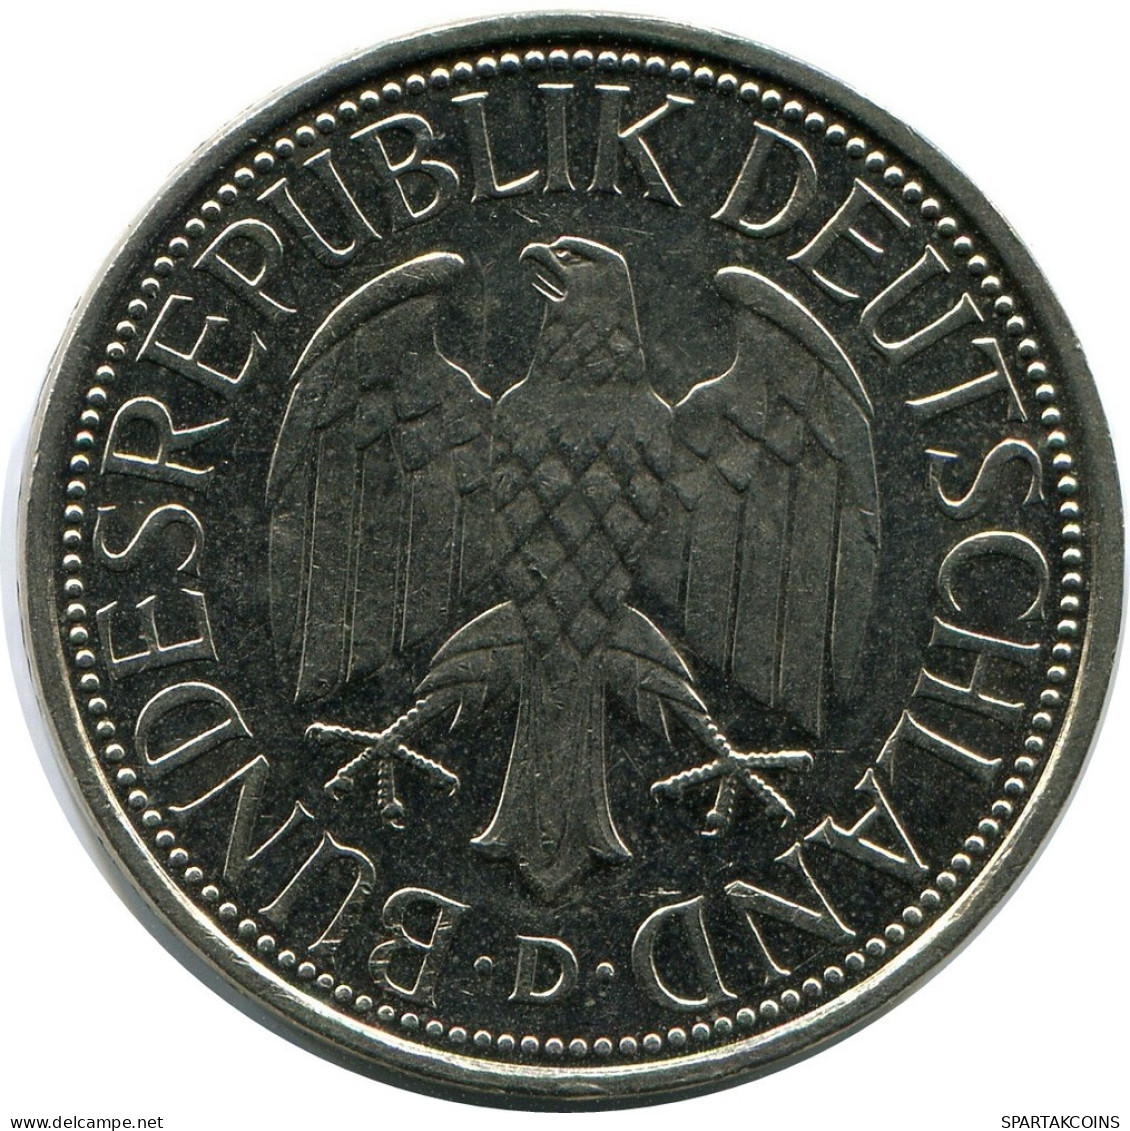 1 DM 1990 D BRD ALEMANIA Moneda GERMANY #AZ443.E.A - 1 Mark